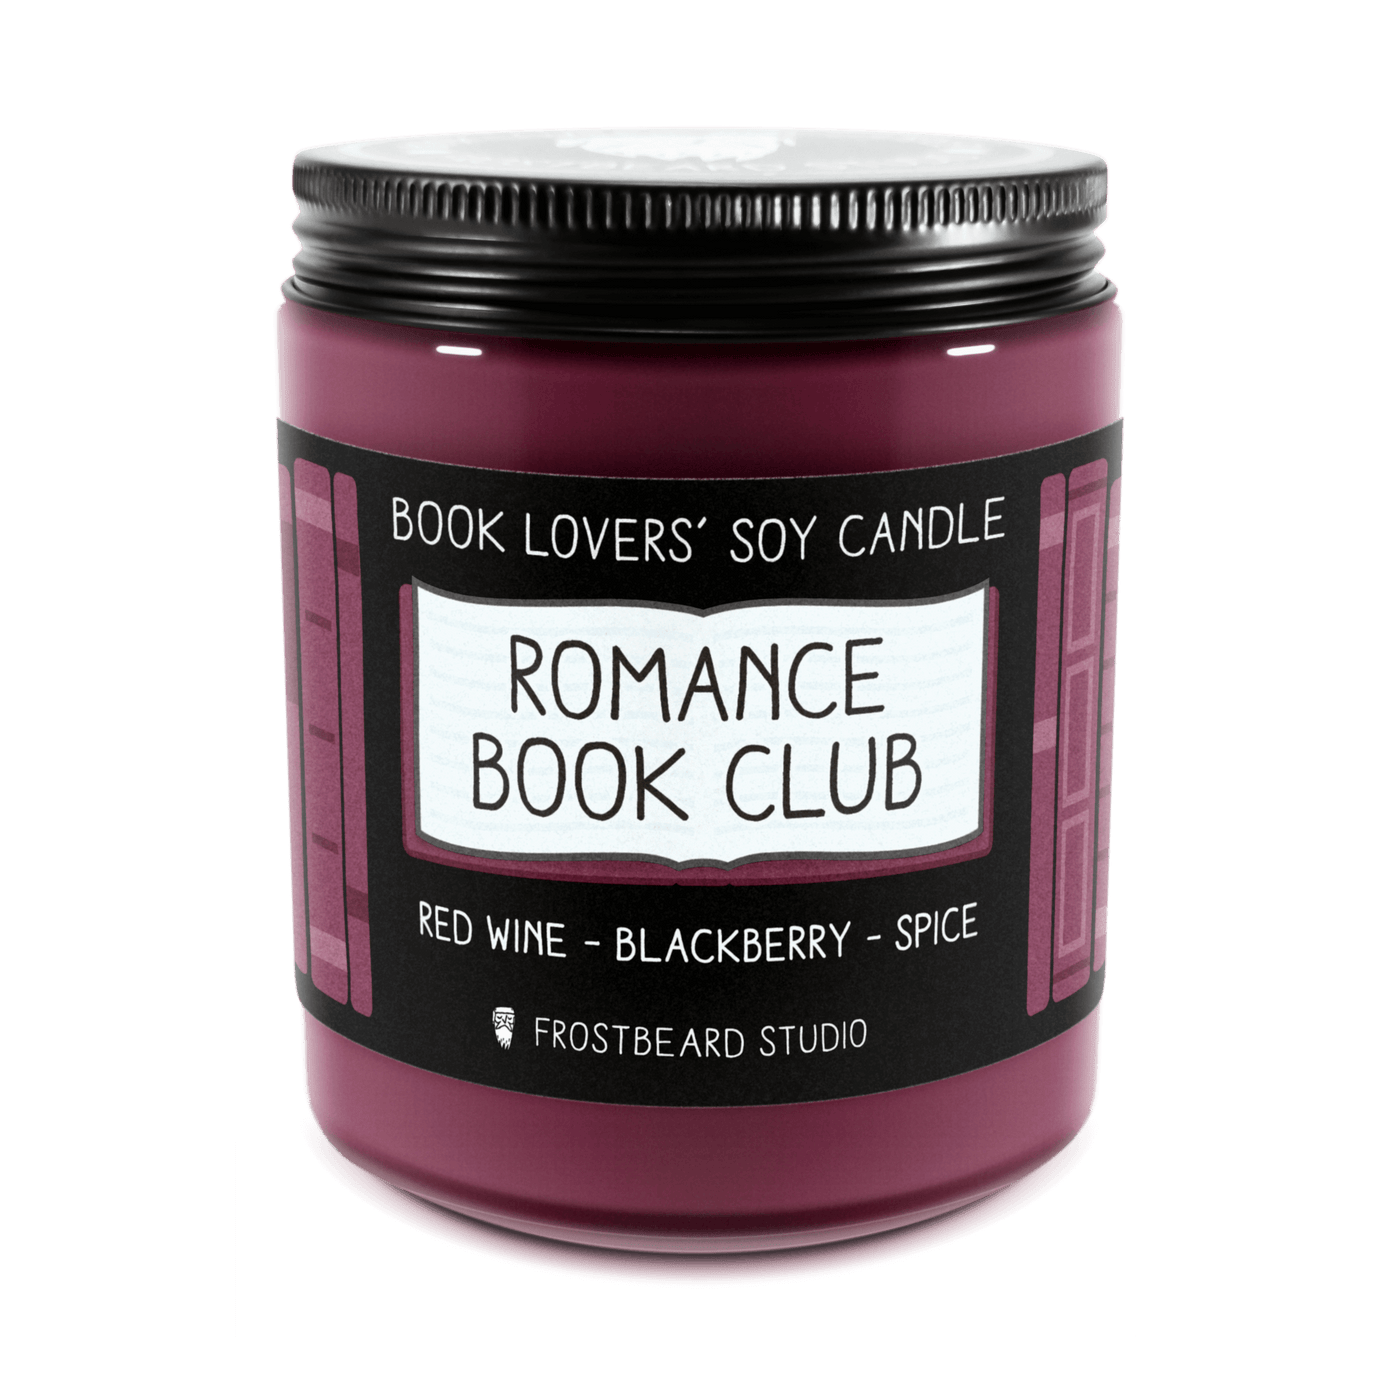 Romance Book Club - 8 oz Jar - Book Lovers' Soy Candle - Frostbeard Studio